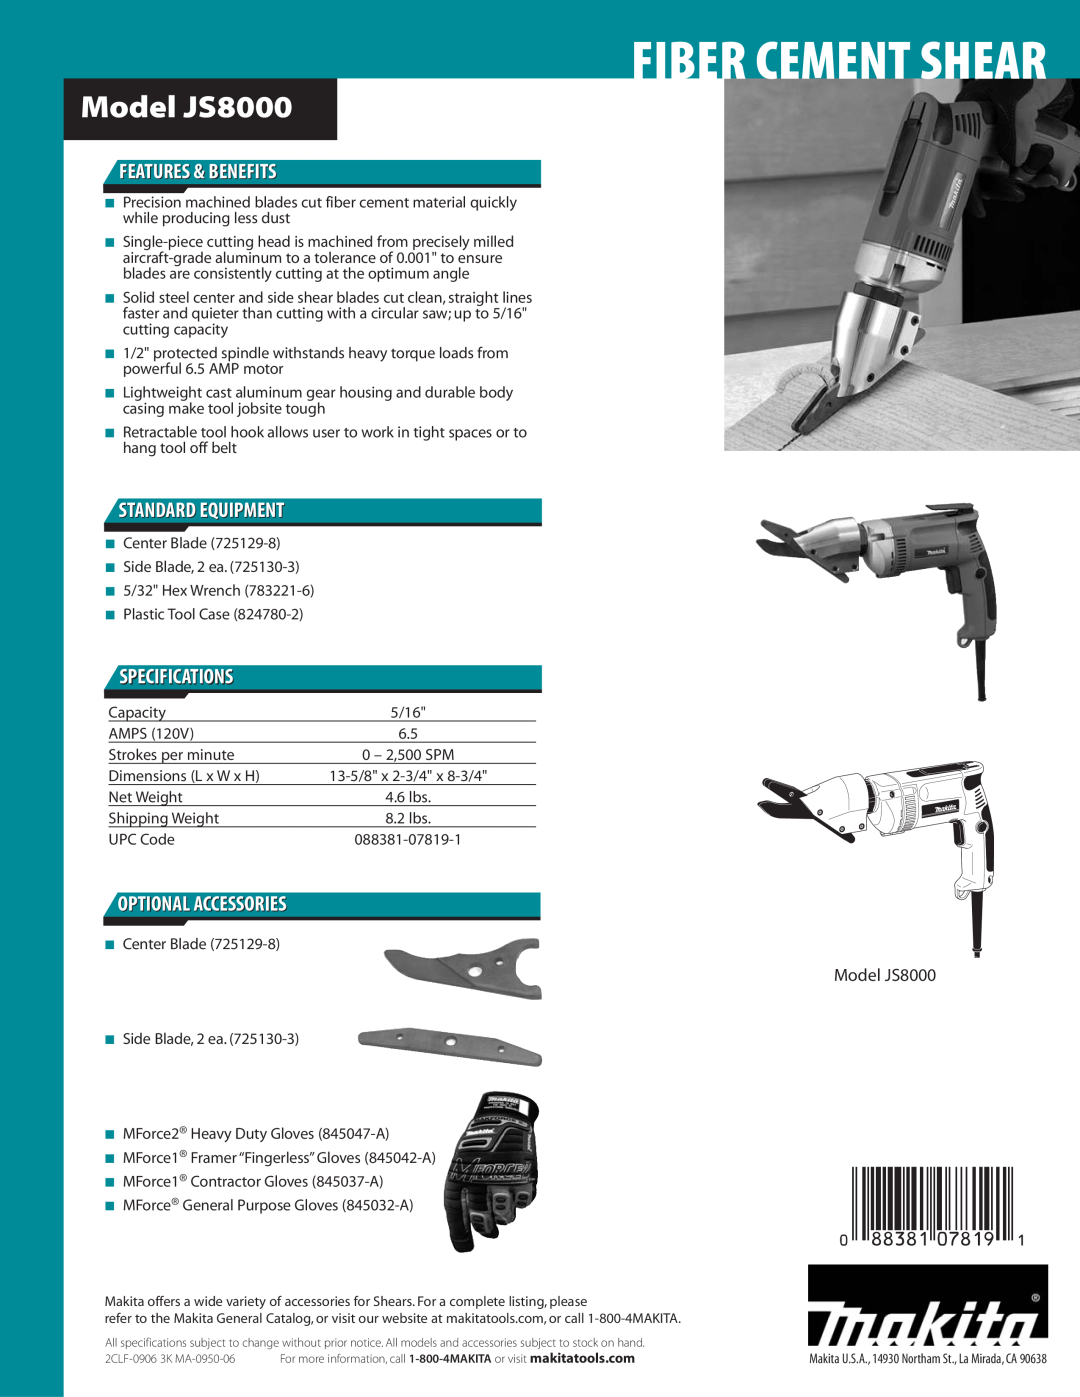 Makita JS8000 manual Features & Benefits, Standard Equipment, Specifications, Optional Accessories, Fiber Cement Shear 